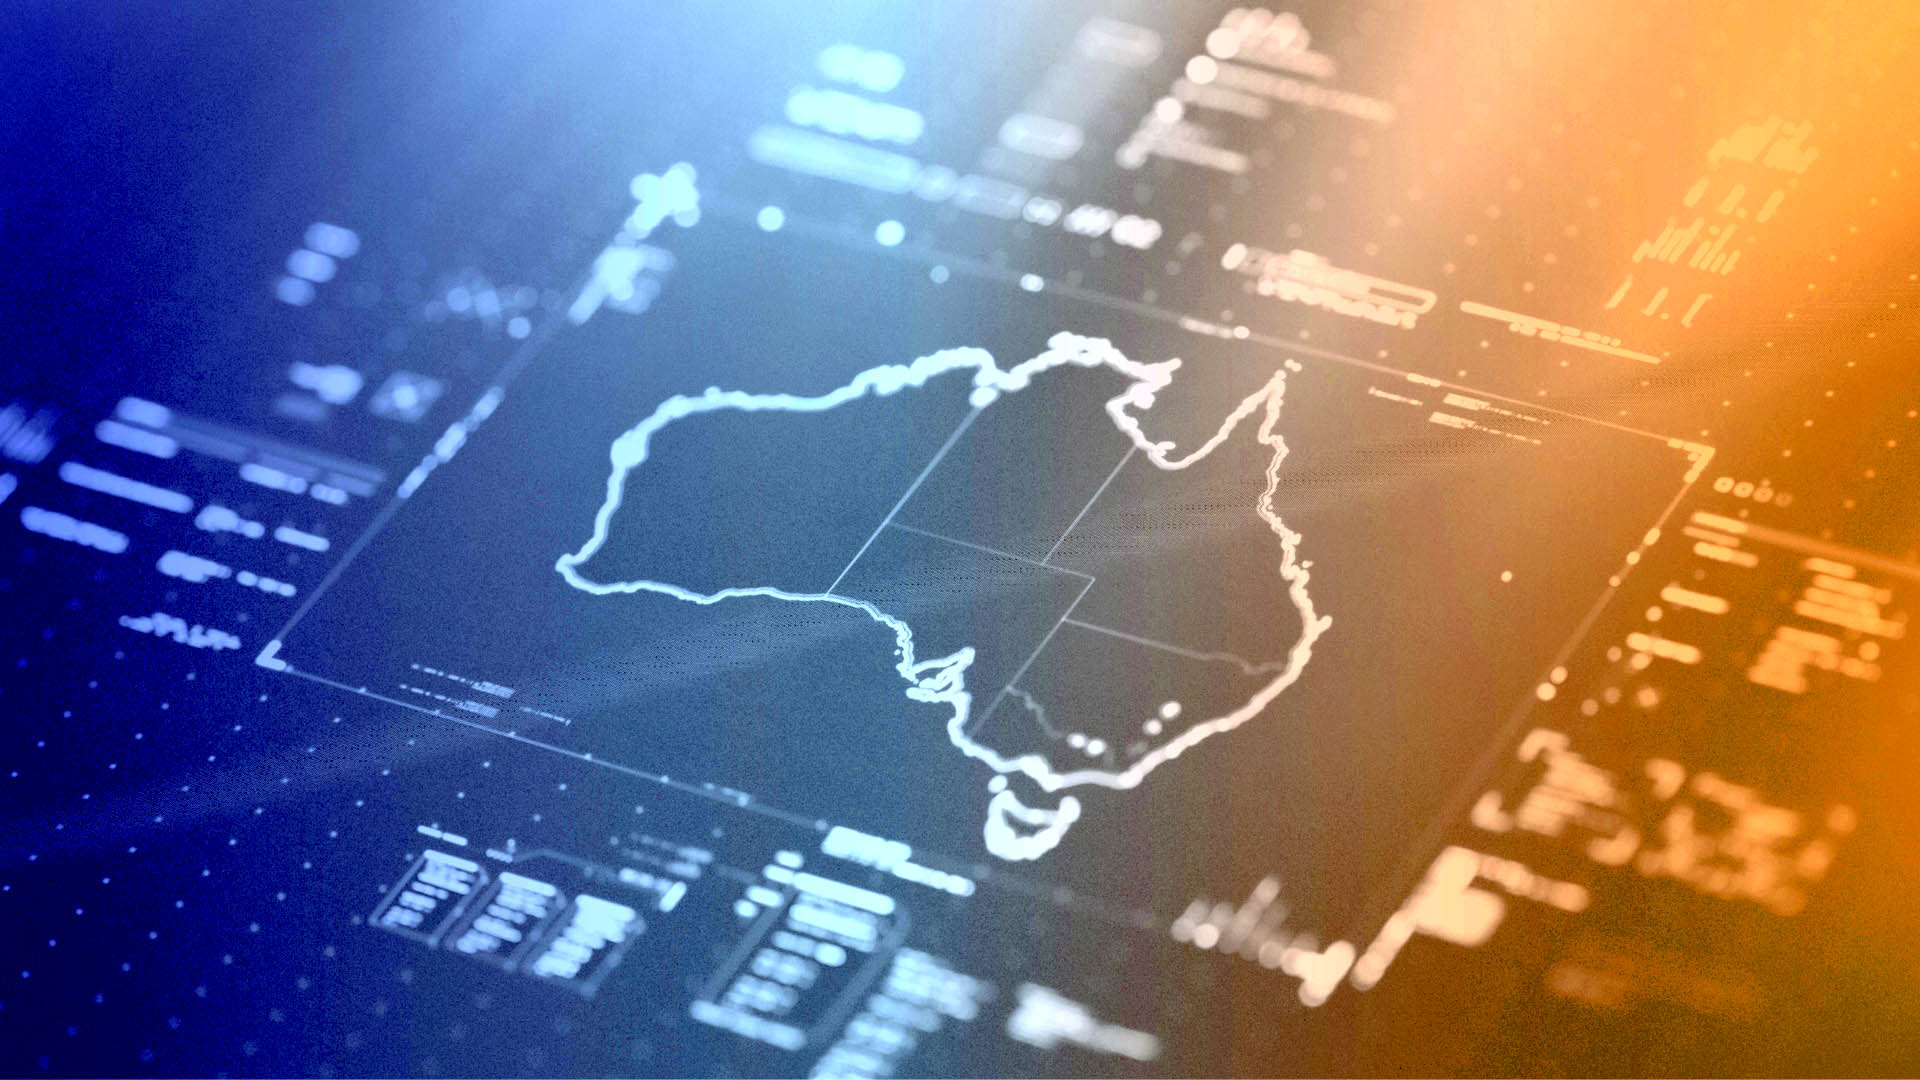 Map of Australia on a digital display panel